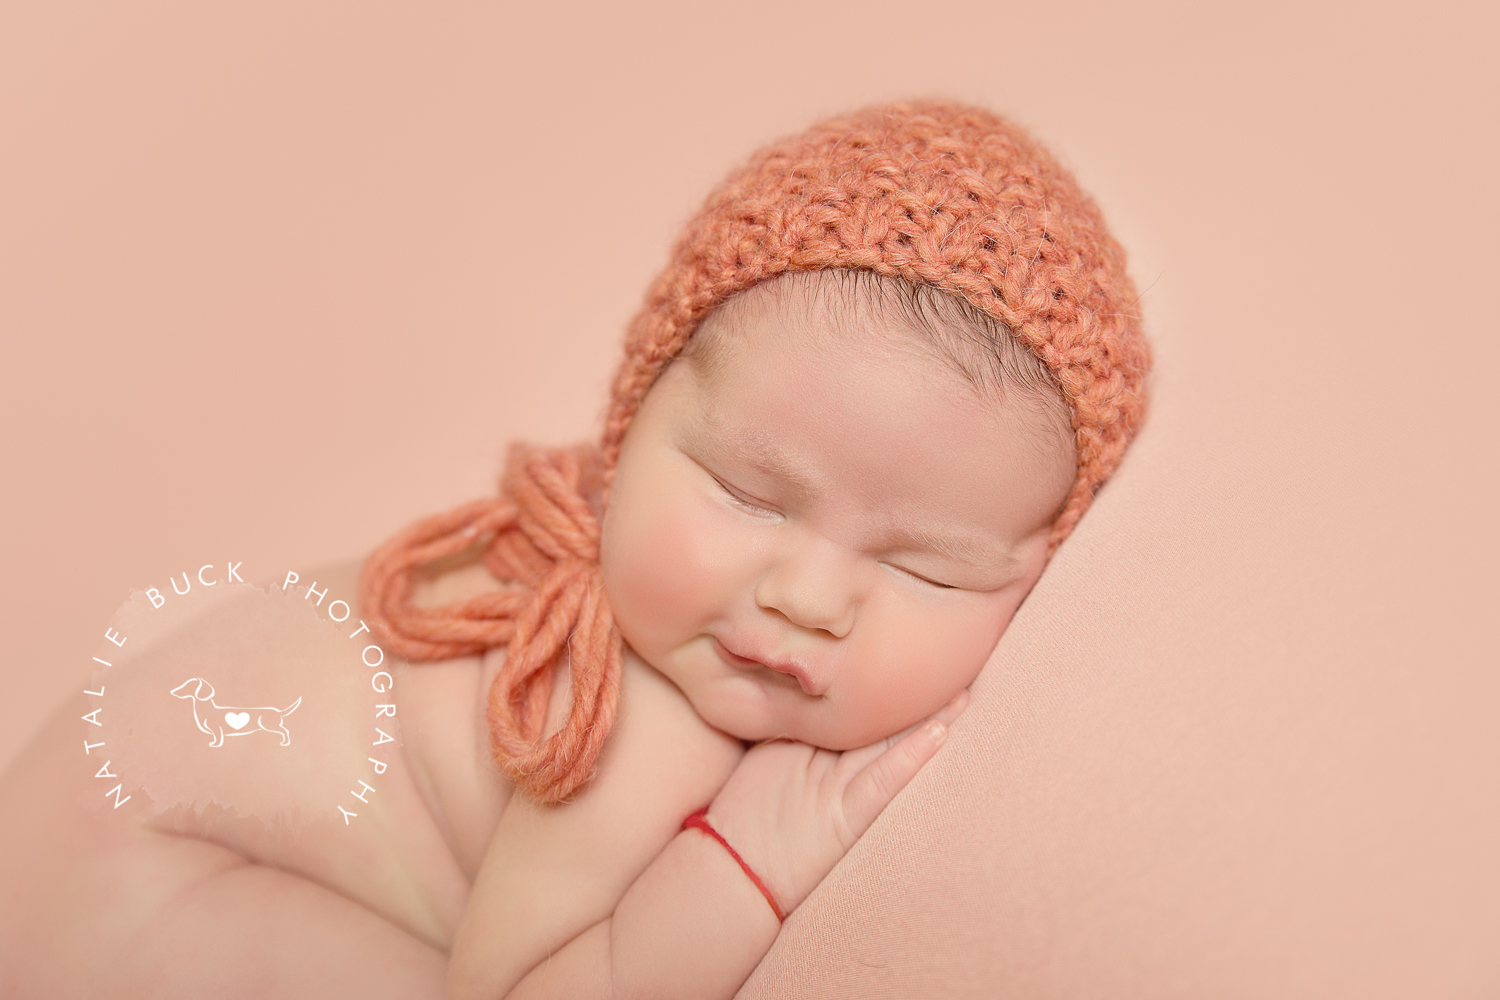 Connecticuts Best Newborn Photographer - Newborn Photography